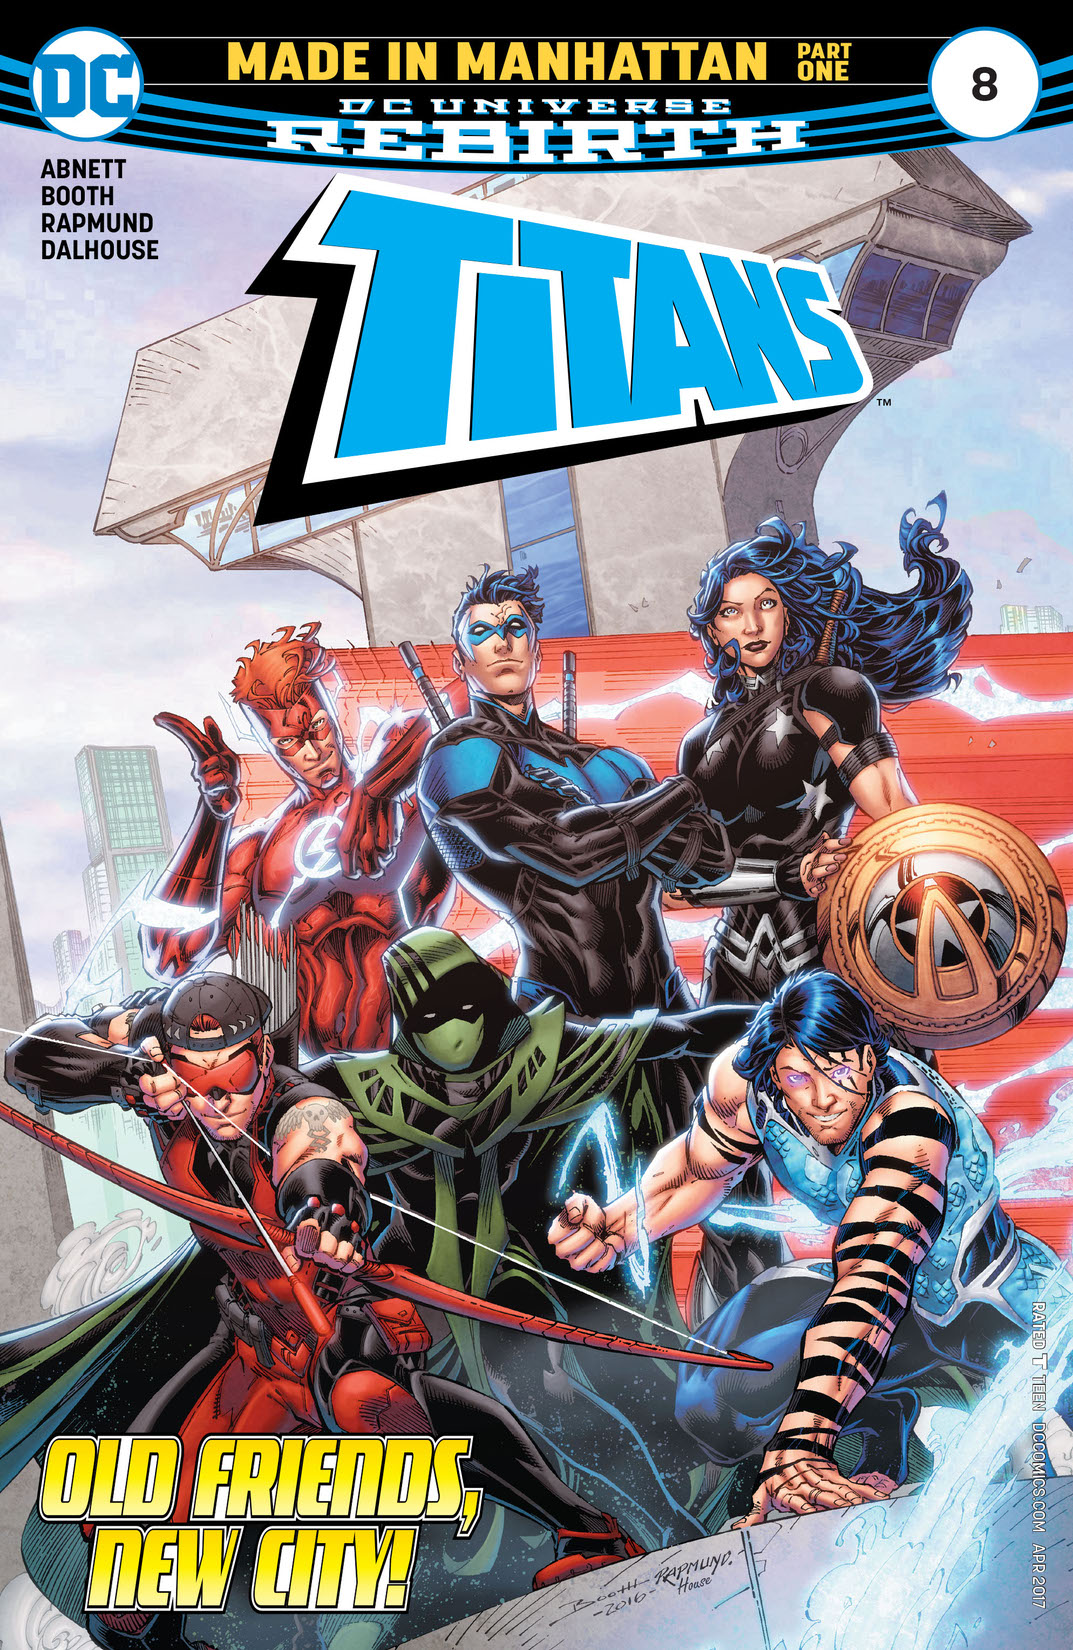 Titans (2016-) #8 preview images